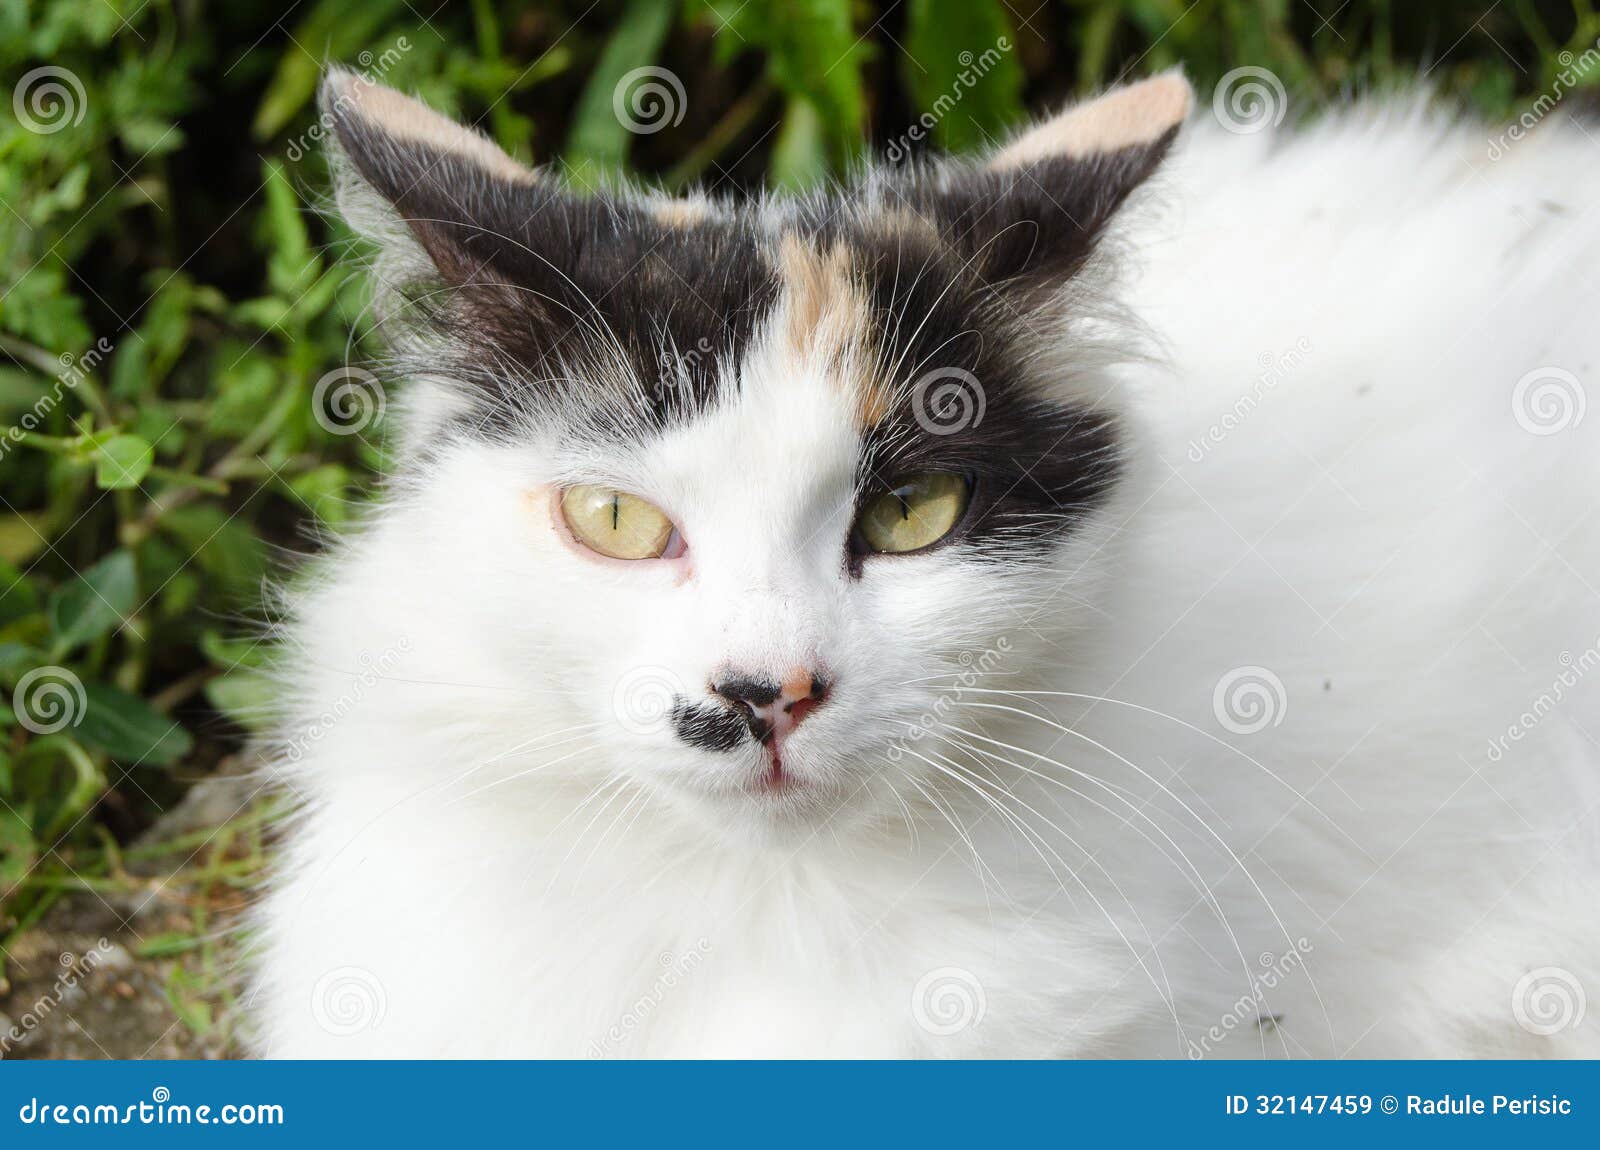 Cat eye stock image. Image of calico, backgrounds, relaxation 32147459